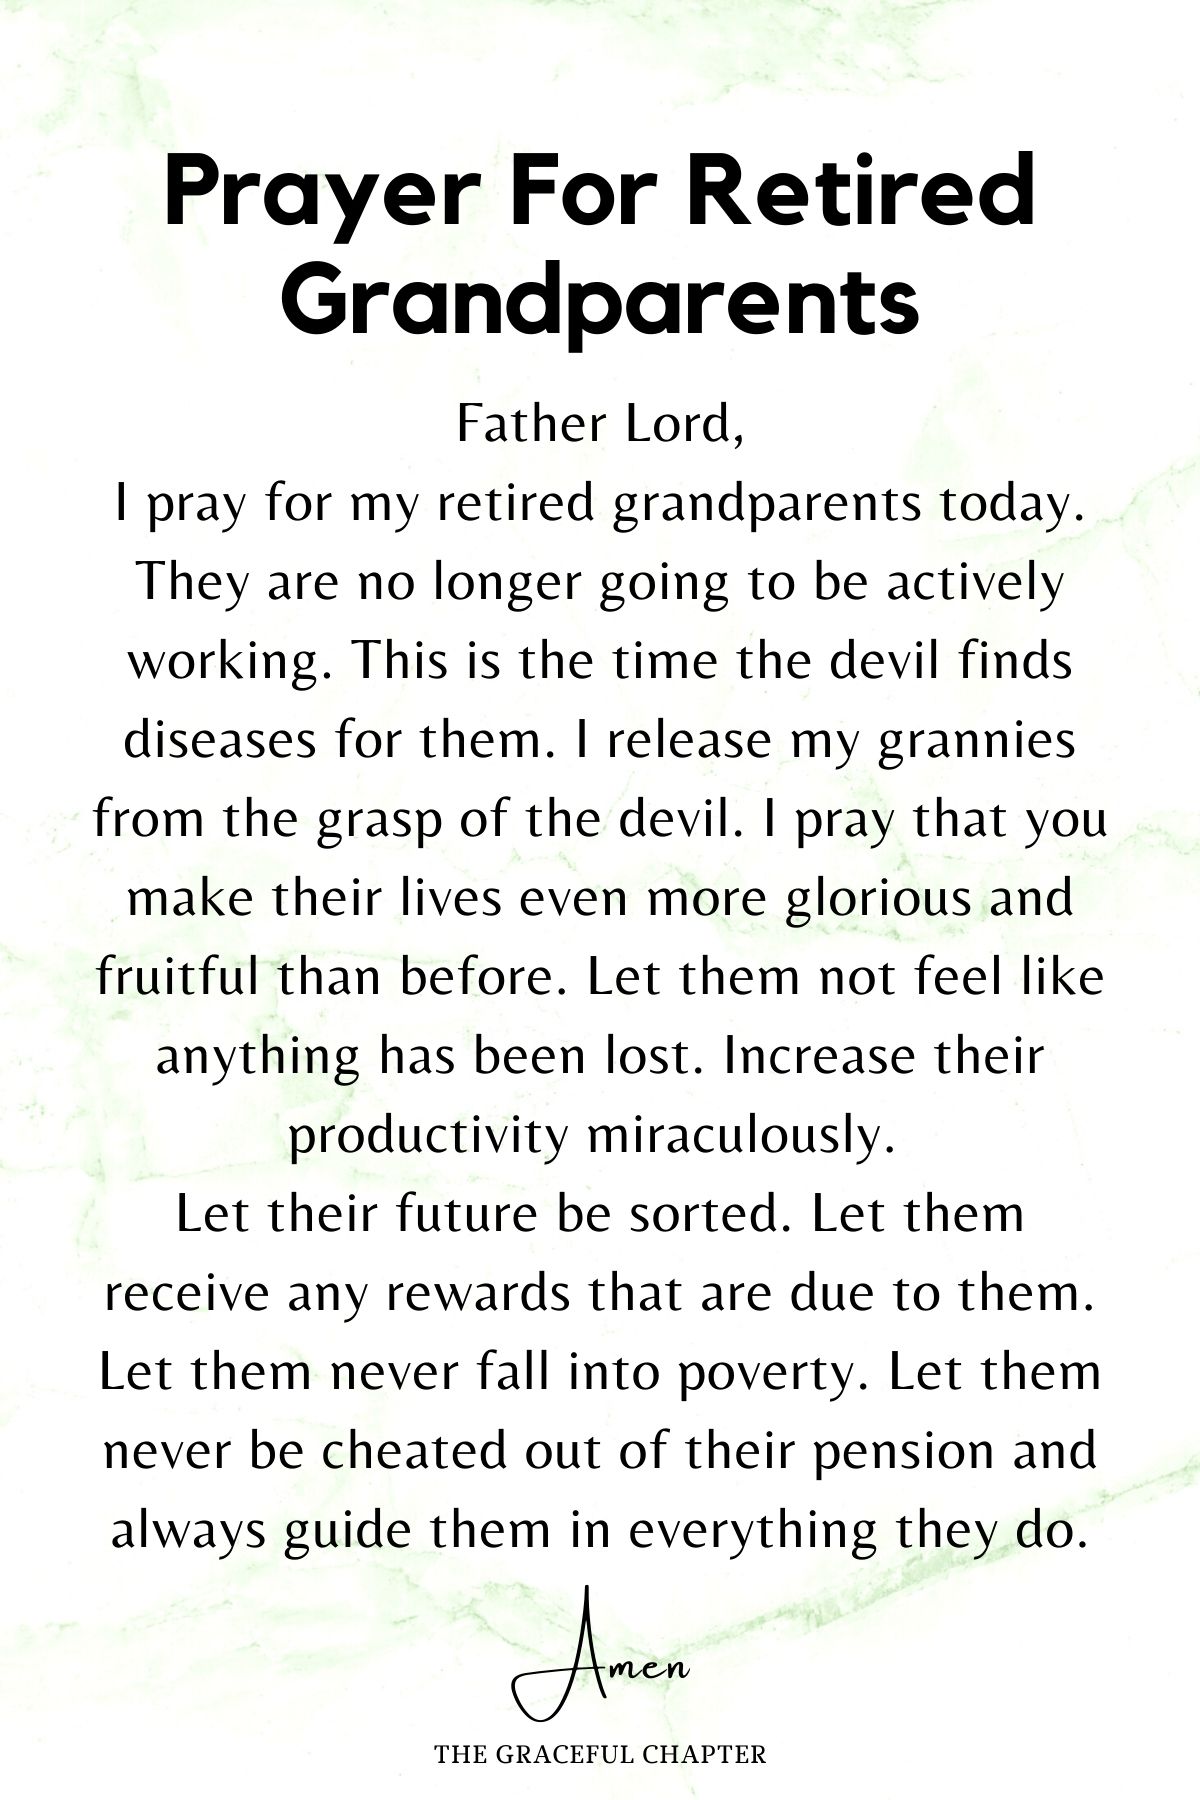 Prayer for a retired grandparents - Prayers for grandparents